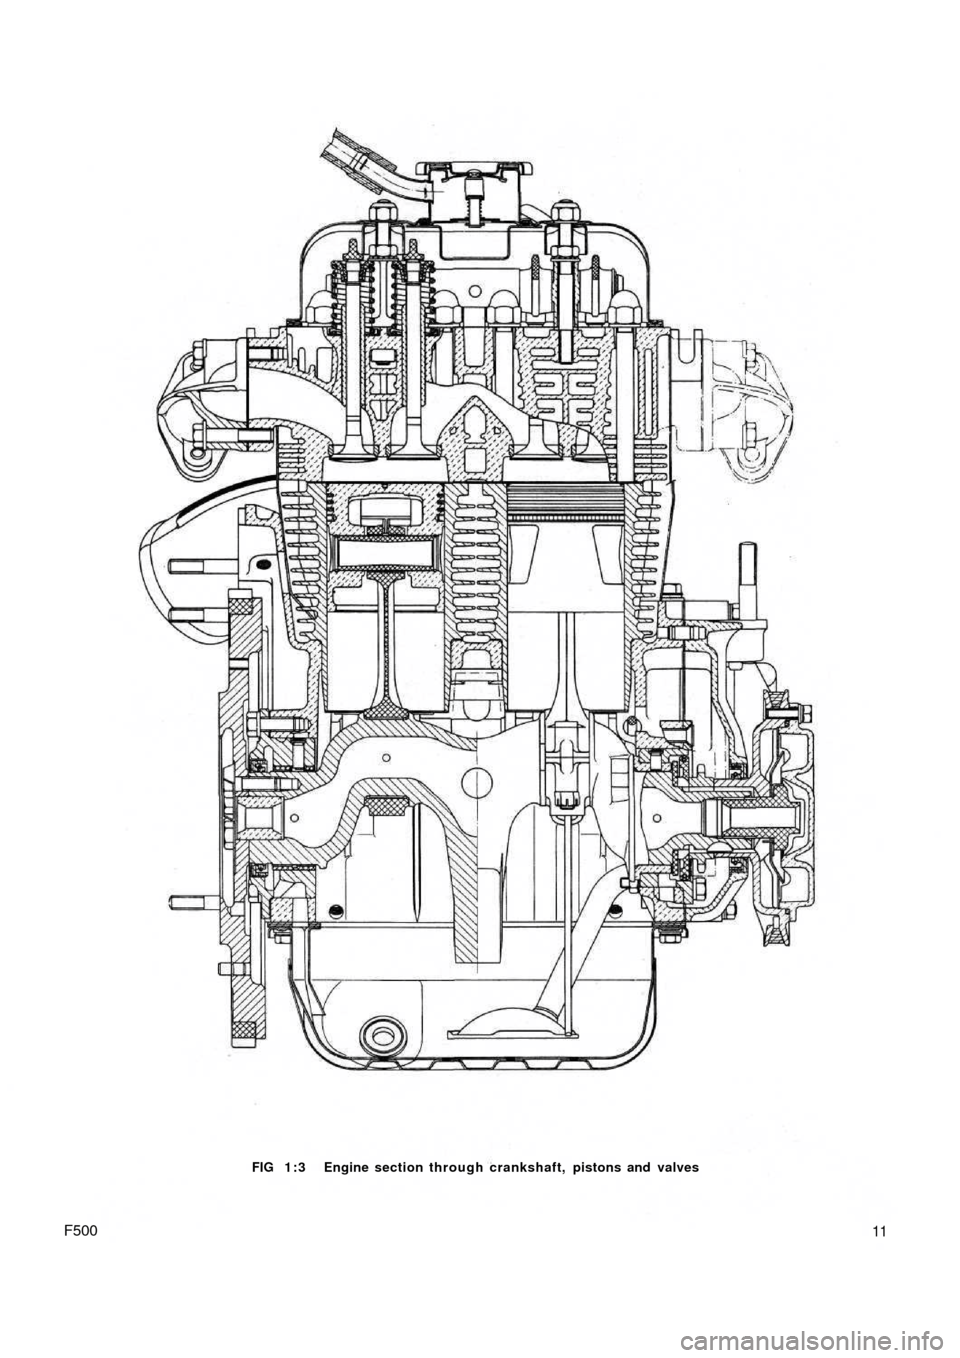 FIAT 500 1959 1.G Workshop Manual FIG 1 : 3  Engine section through crankshaft, pistons and  valves
F50011 